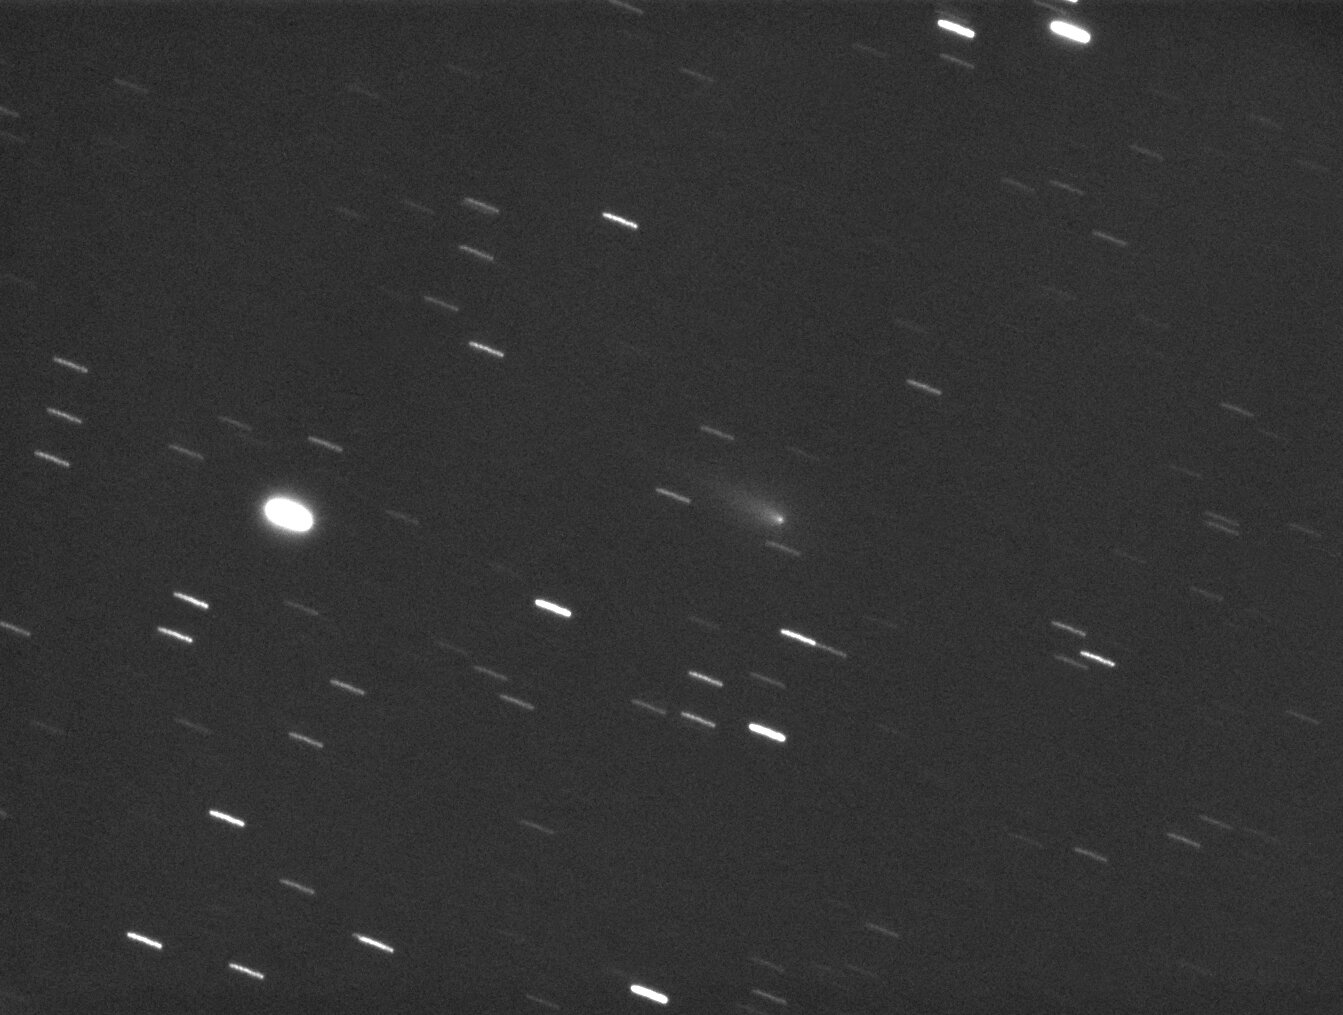 Comet C/2012 S1 - (ISON)